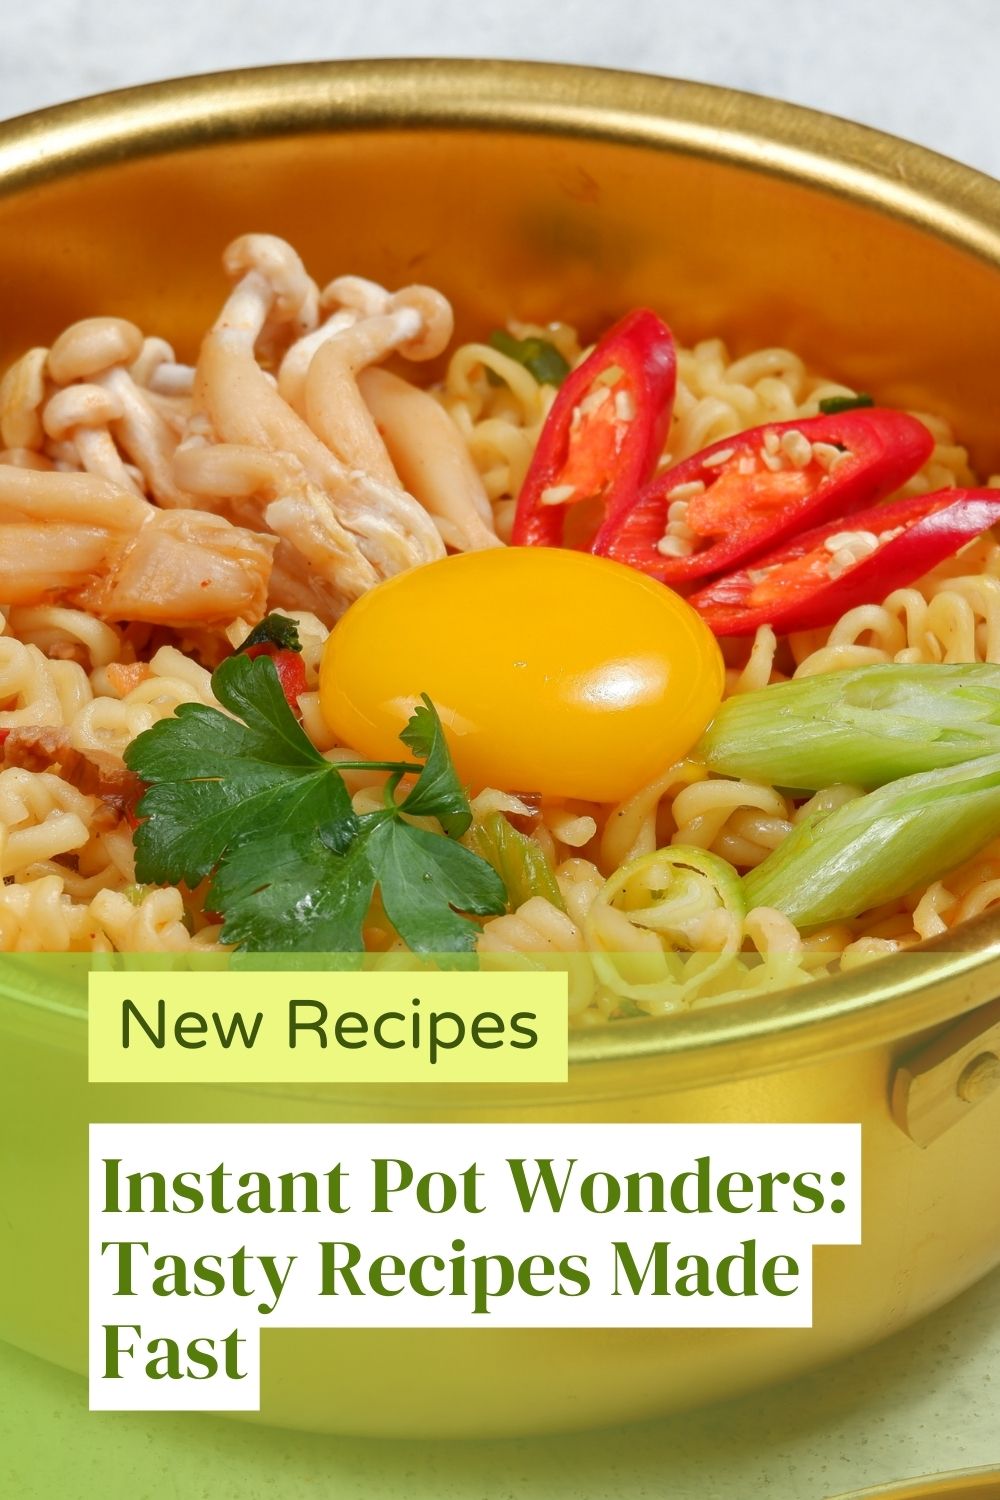 Instant Pot Wonders: Tasty Recipes Made Fast